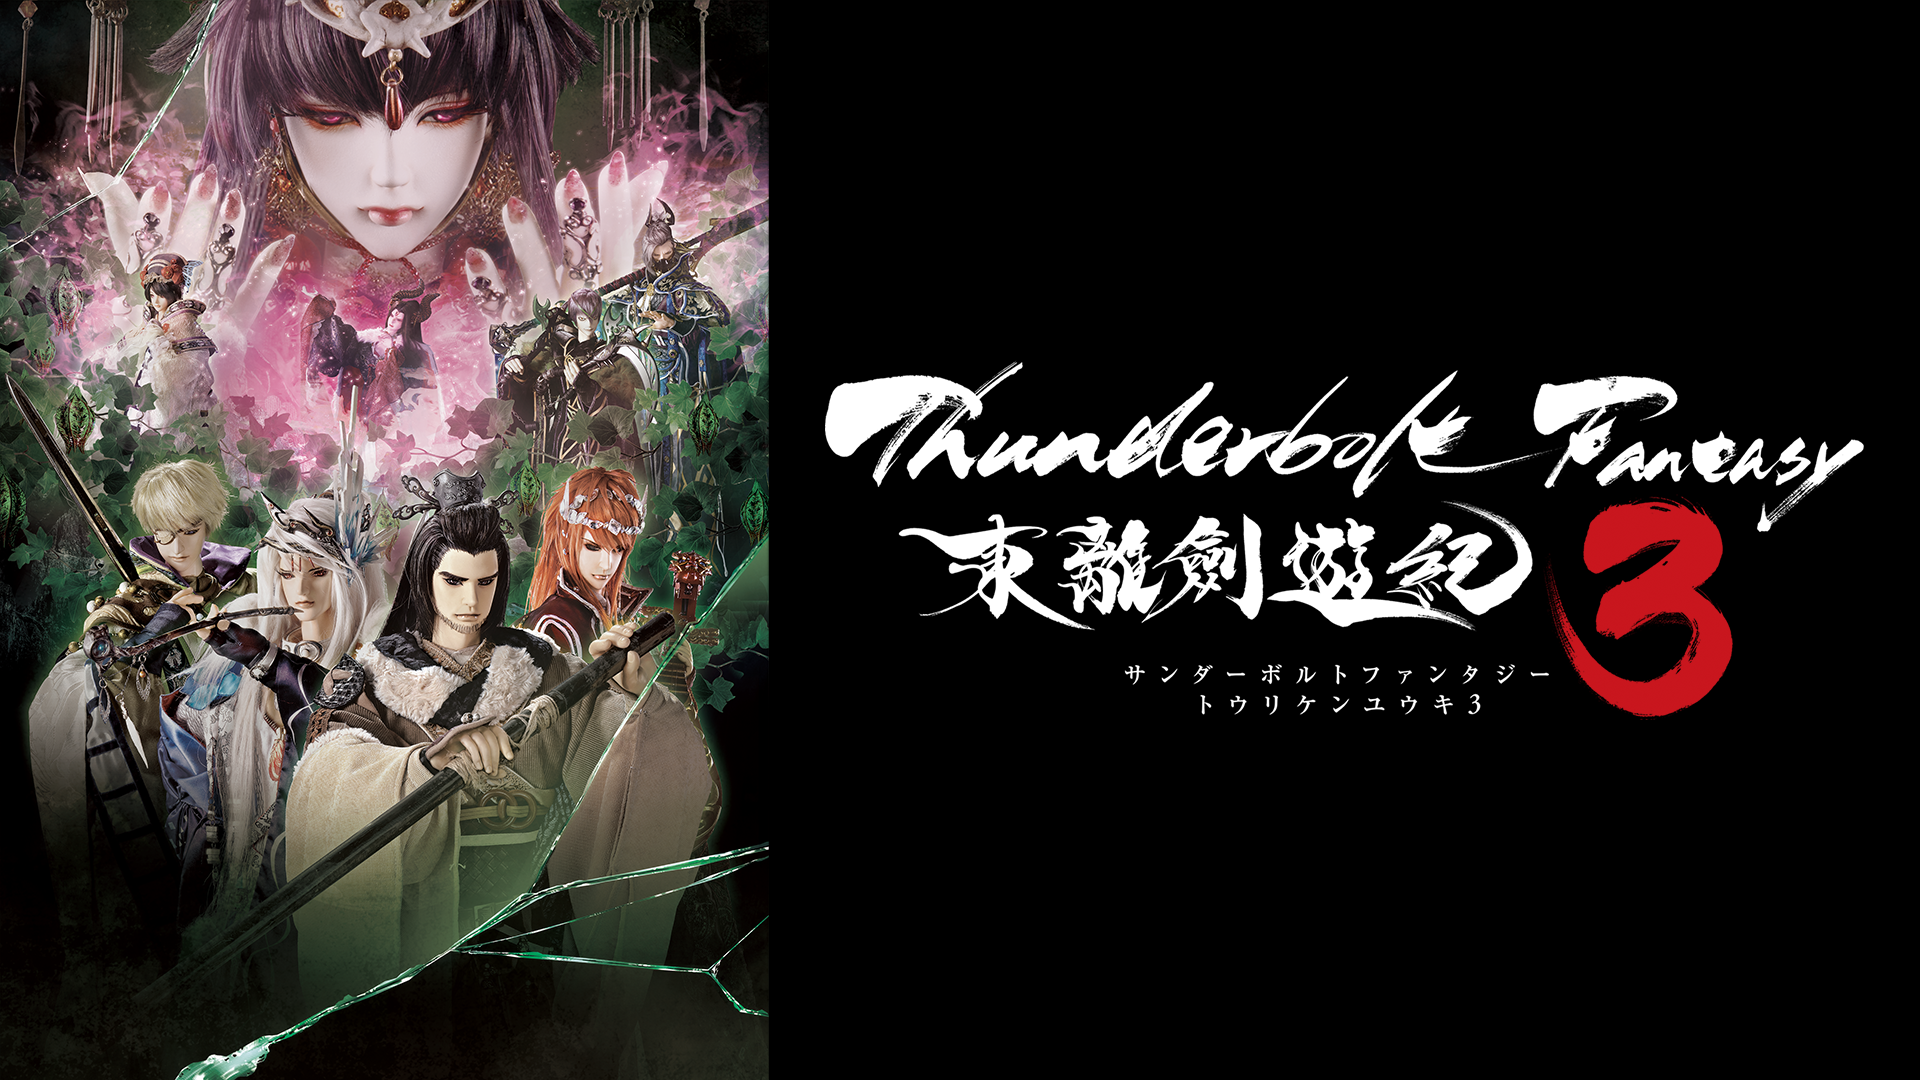 Thunderbolt Fantasy 東離劍遊紀３(アニメ / 2021) - 動画配信 | U-NEXT 31日間無料トライアル